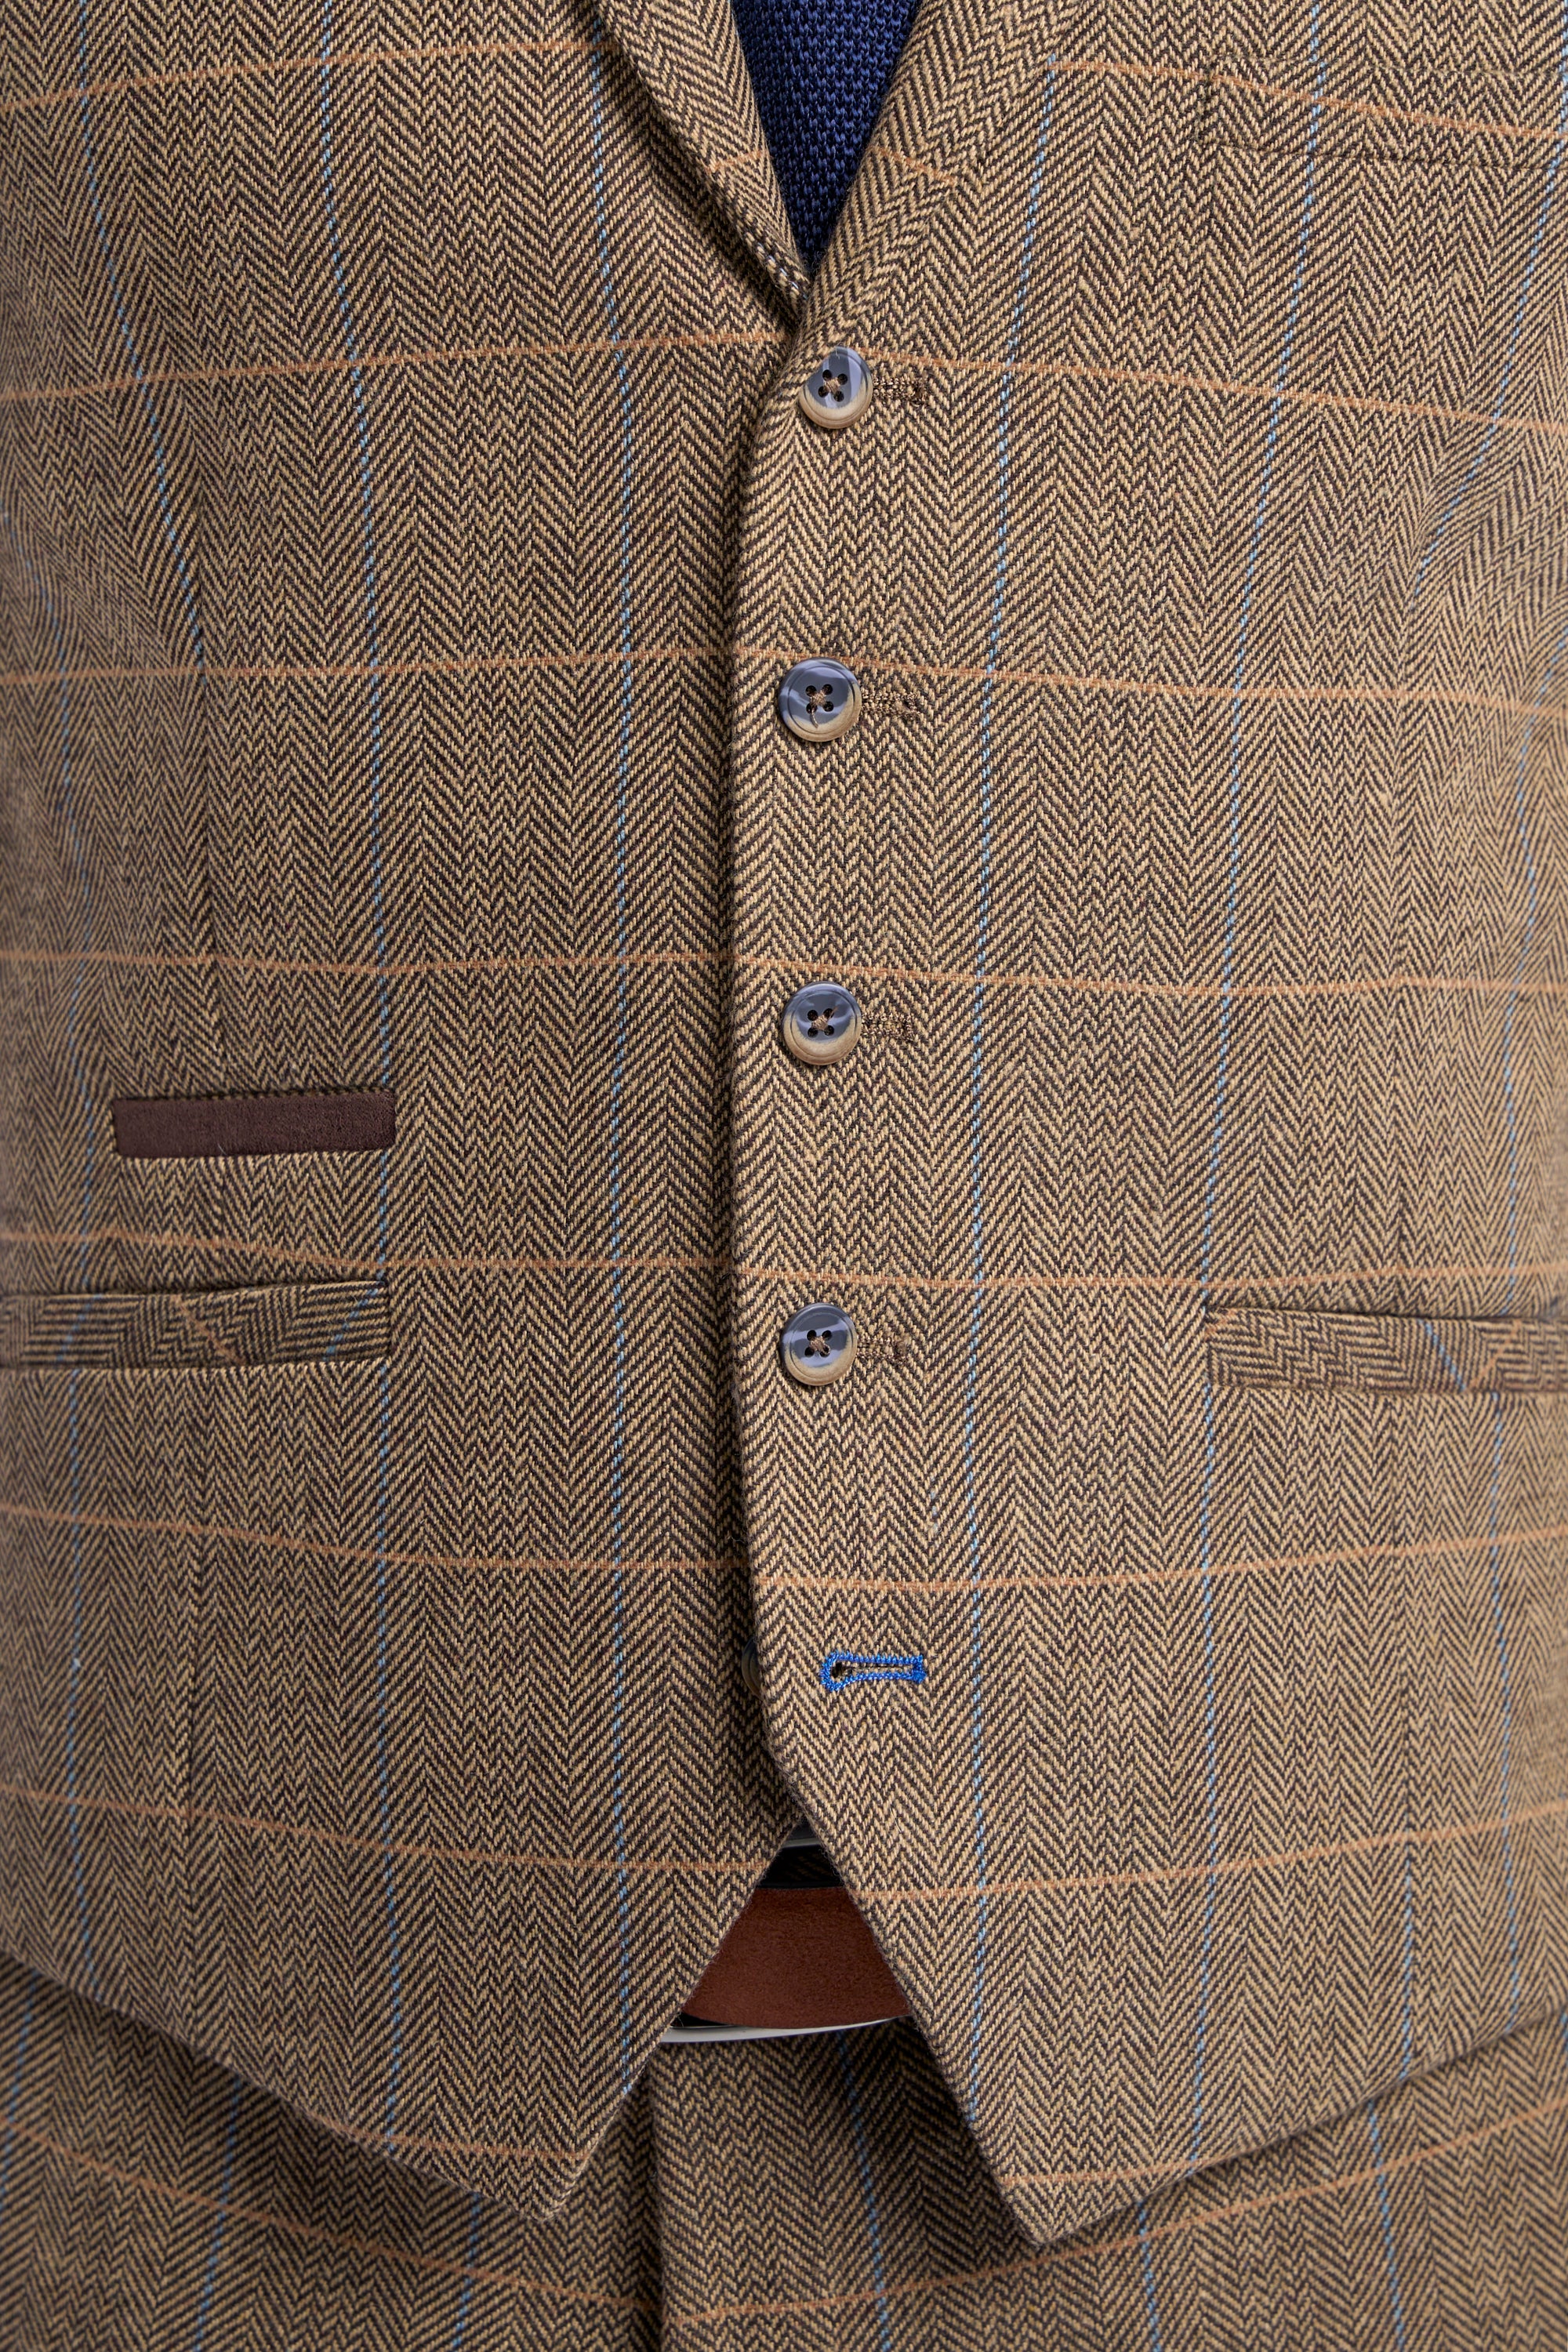 Albert Brown Tweed Three Piece Suit